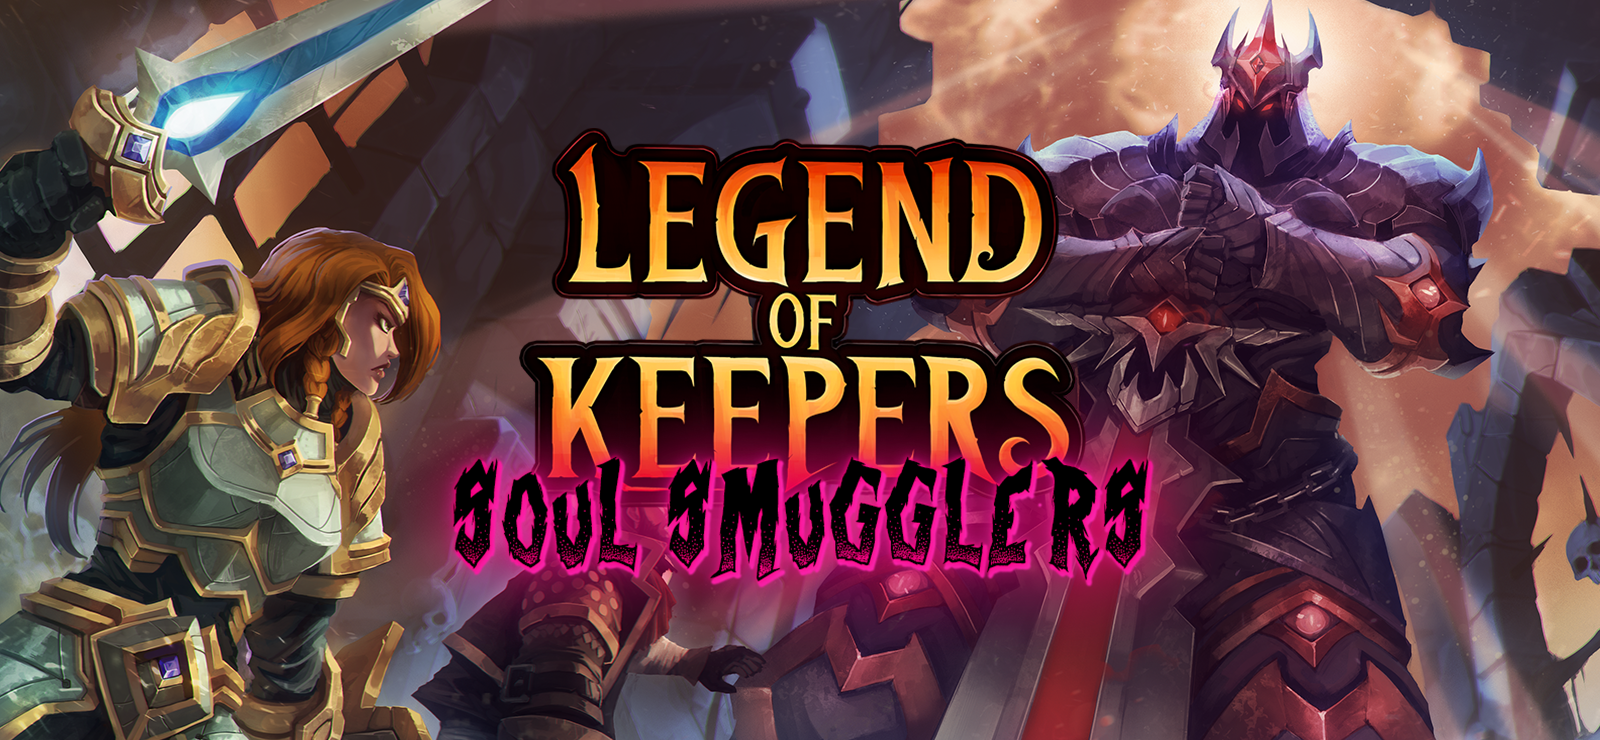 Legend Of Keepers: Soul Smugglers